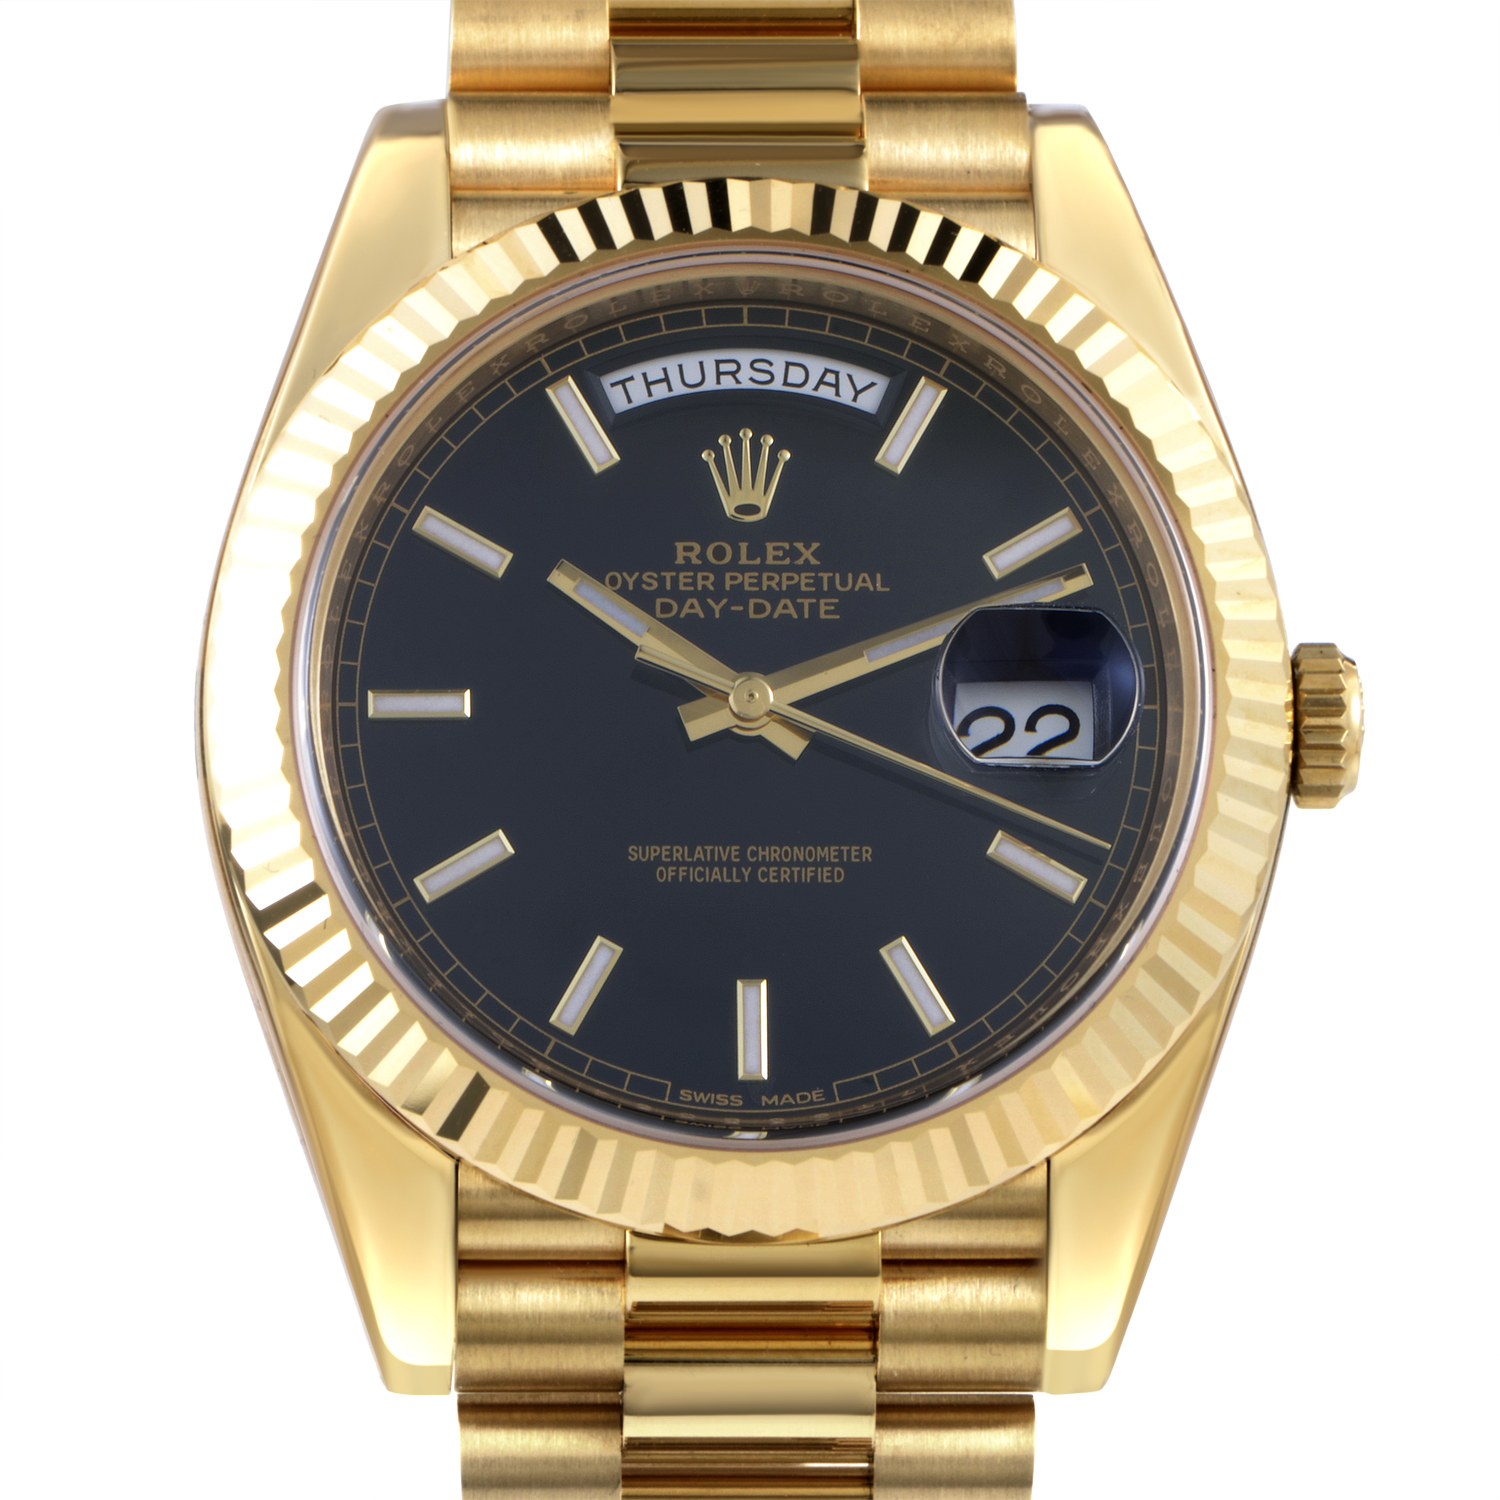 Rolex Oyster Perpetual Date, Submariner Superlative Chronometer ...